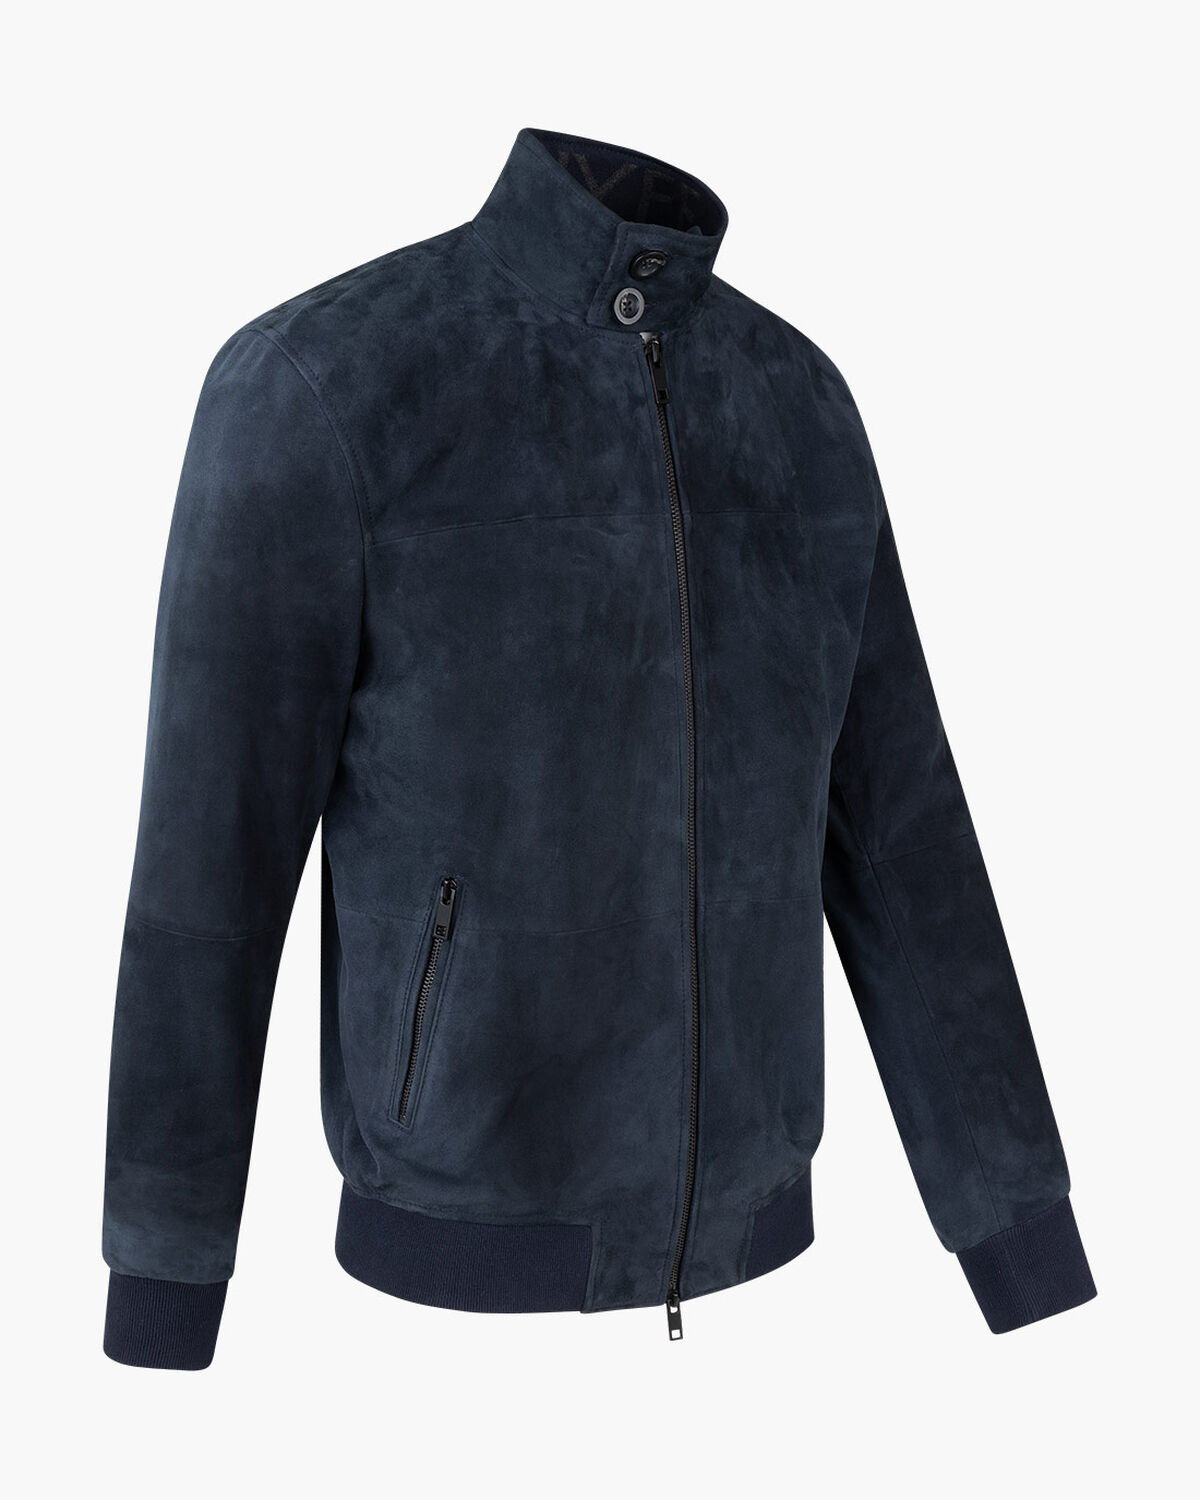 Dante Leather Harrington Jacket, Navy, hi-res